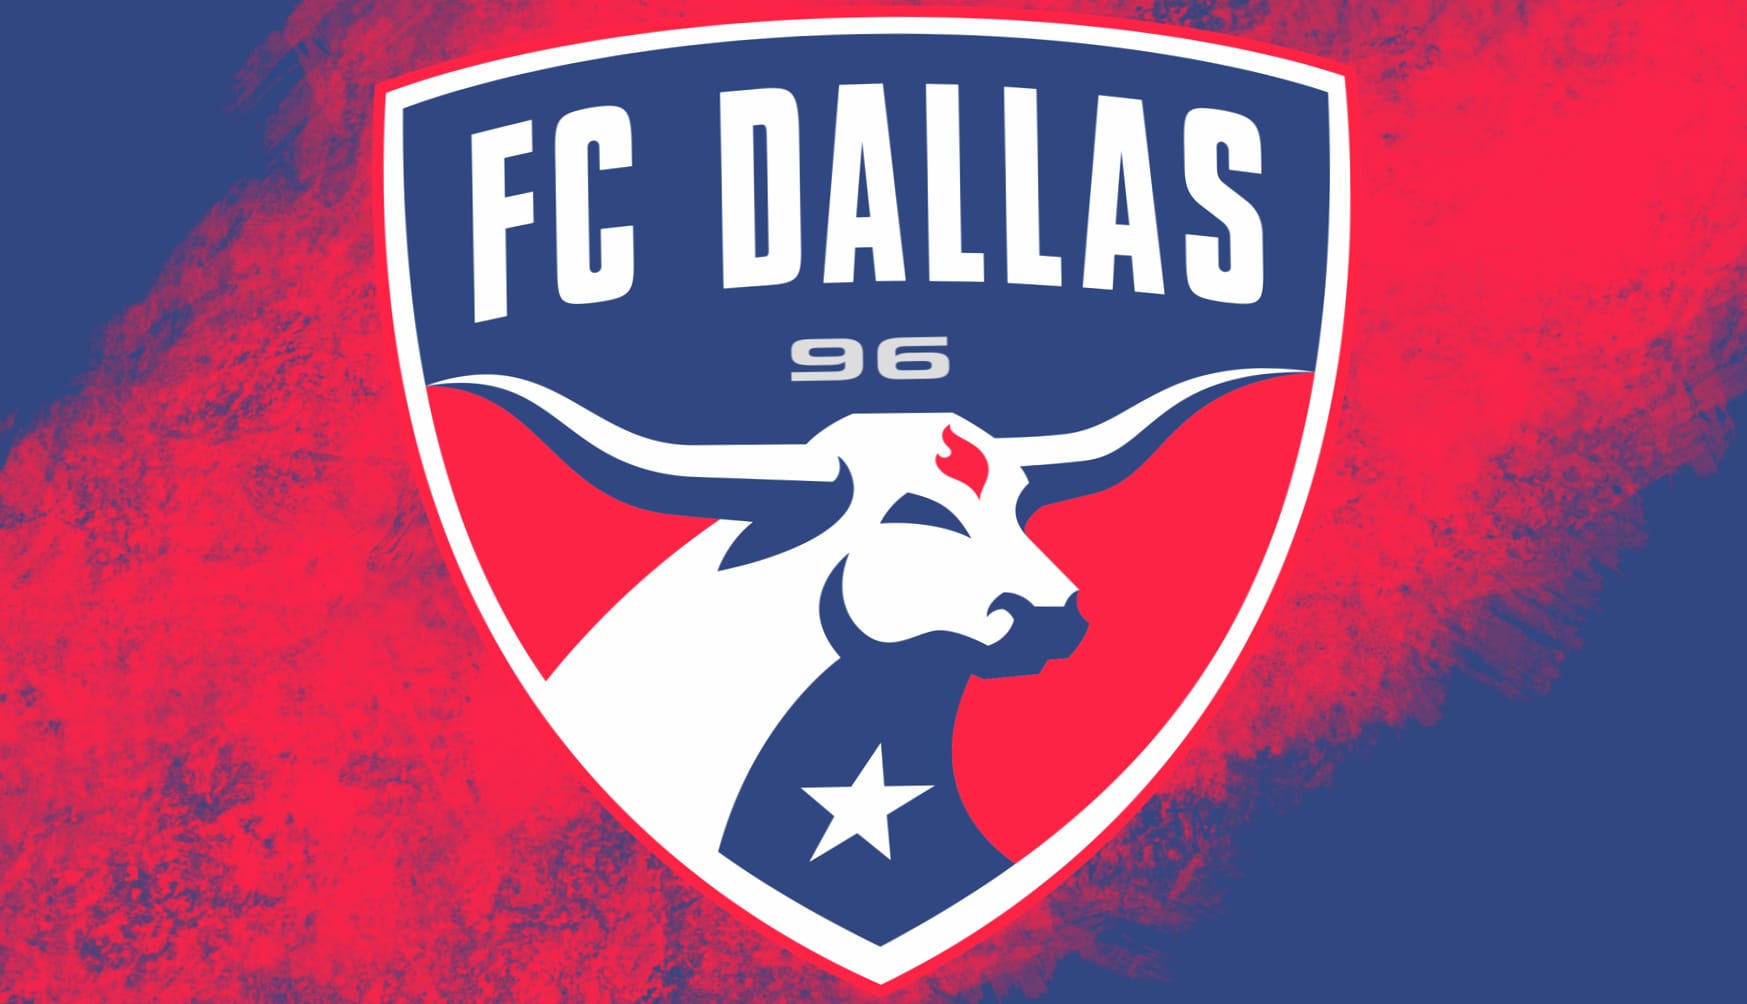 FC Dallas at 2048 x 2048 iPad size wallpapers HD quality